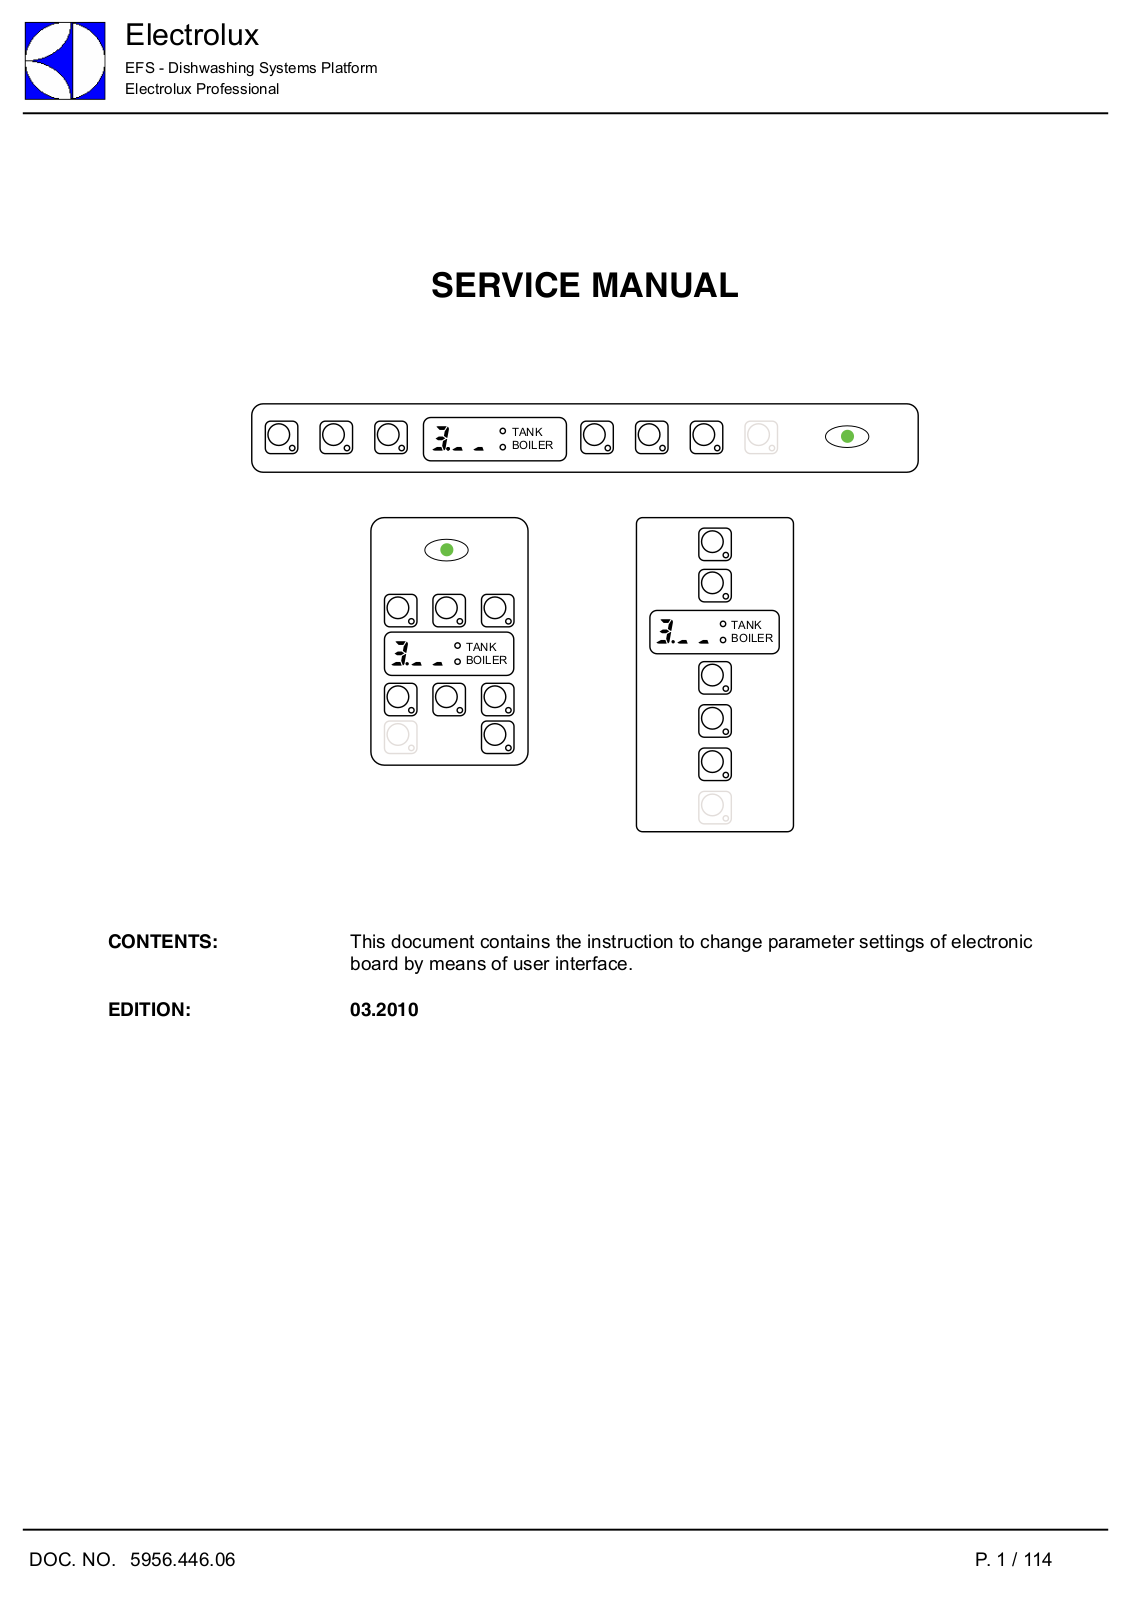 Electrolux WT30H240DU, ECOTEMP 12 Service Manual